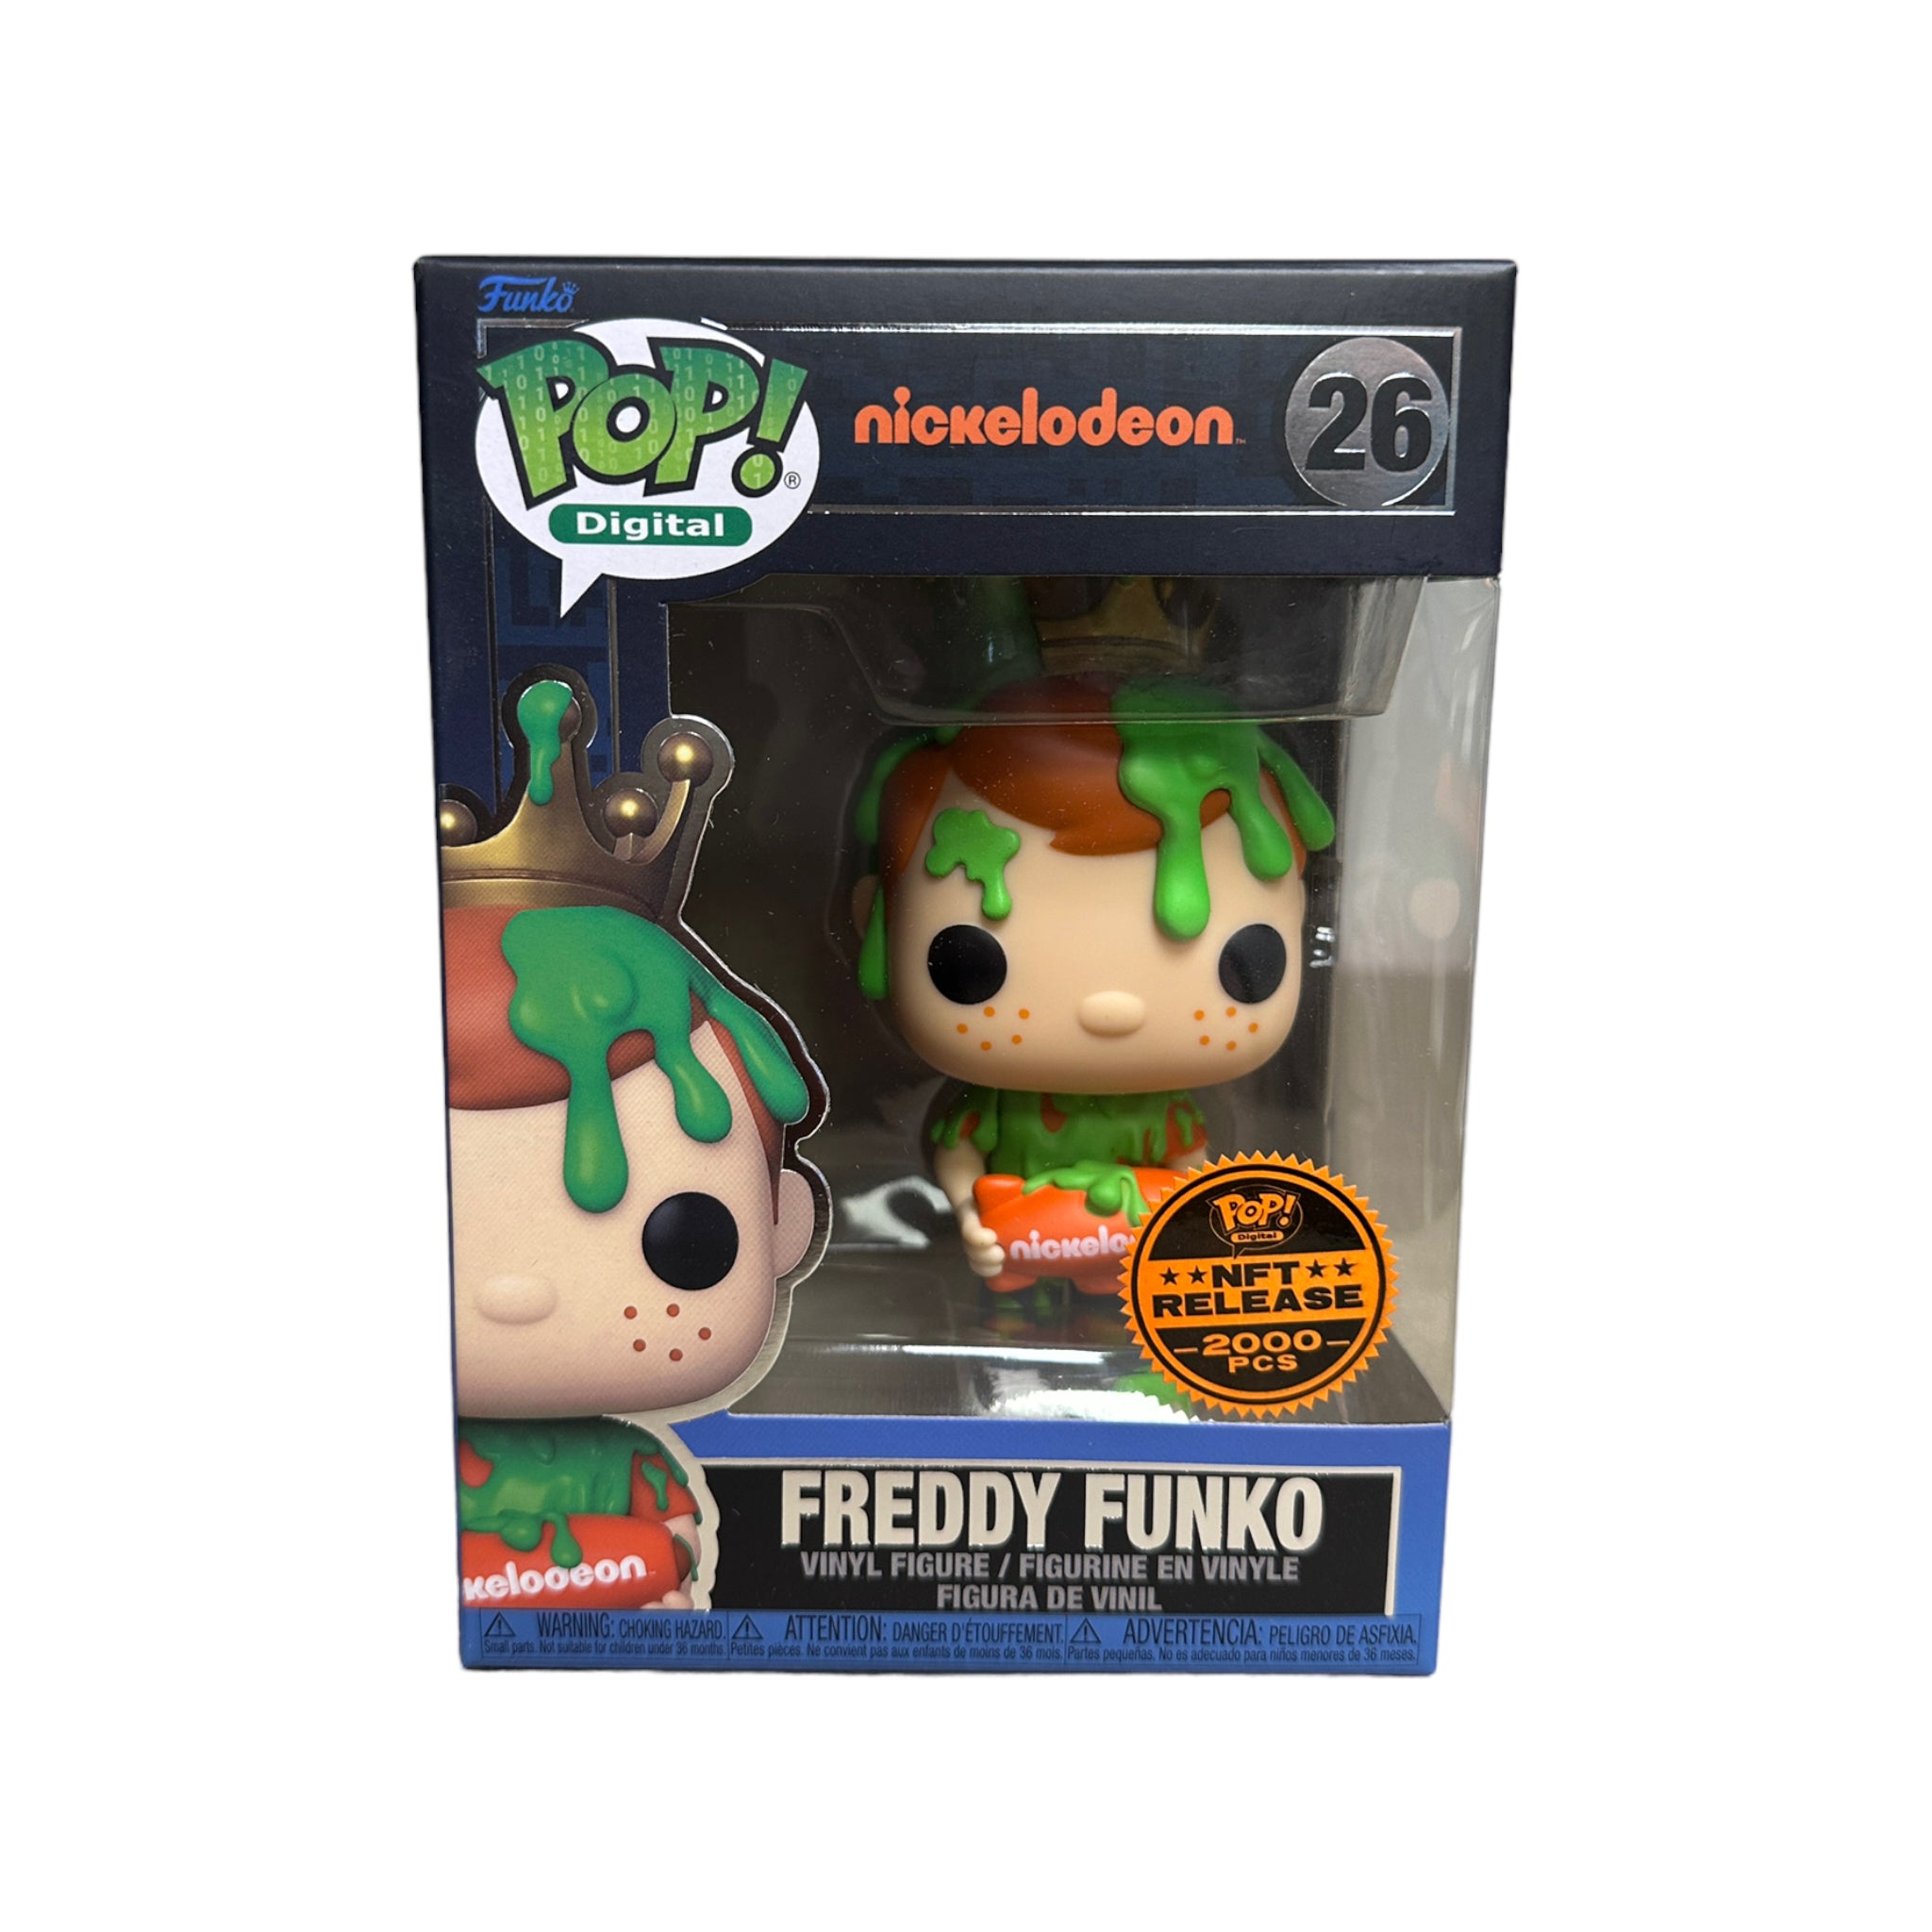 Freddy Funko #26 (Slimed) Funko Pop! - Nickelodeon - NFT Release Exclusive LE2000 Pcs - Condition 9/10